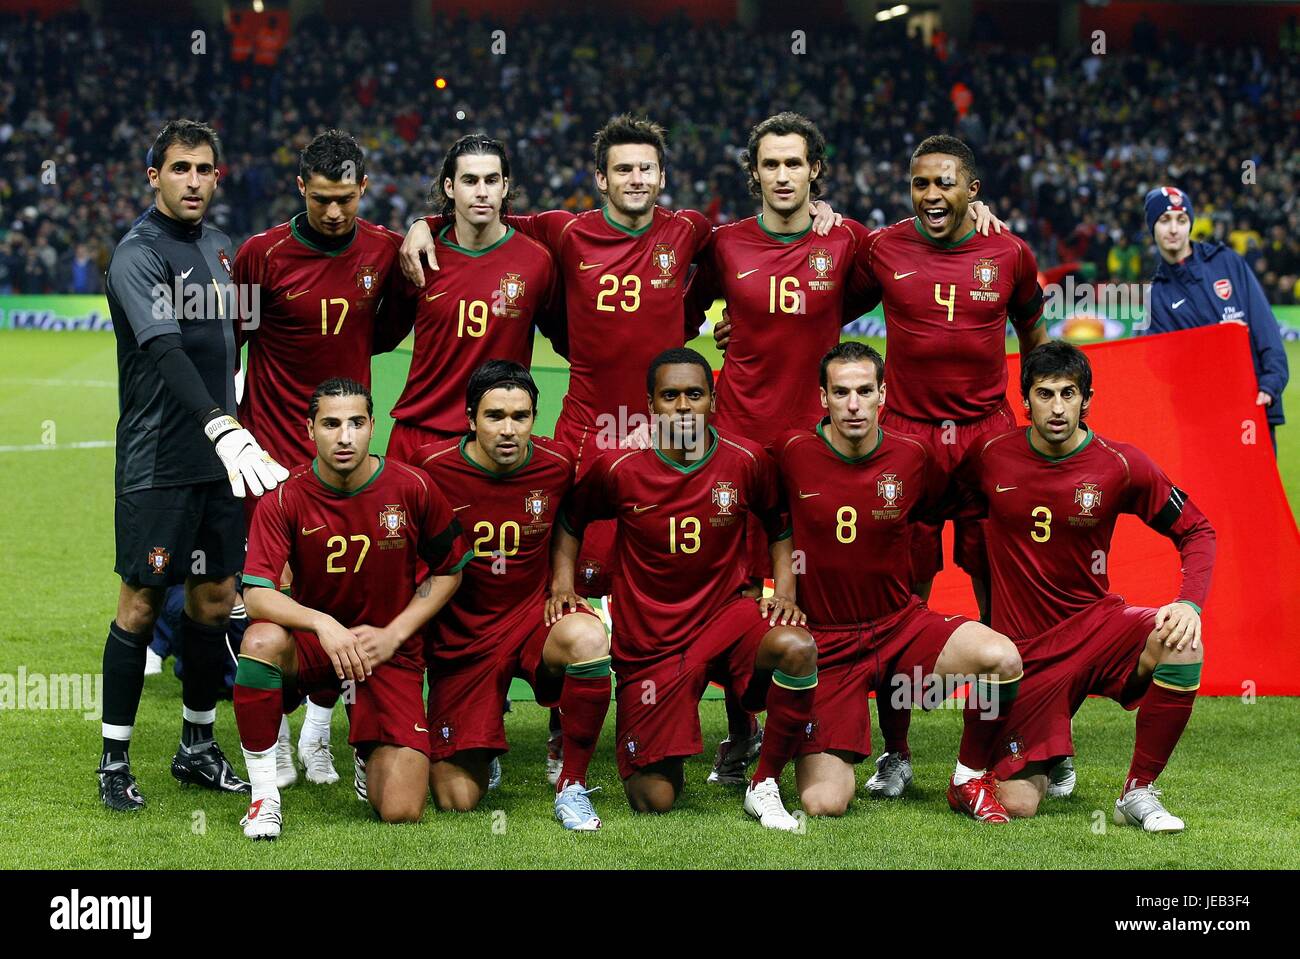 Portugal Team Portugal Nationalmannschaft Das Emirates Stadion Arsenal London 6 Februar 2007 Stockfotografie Alamy